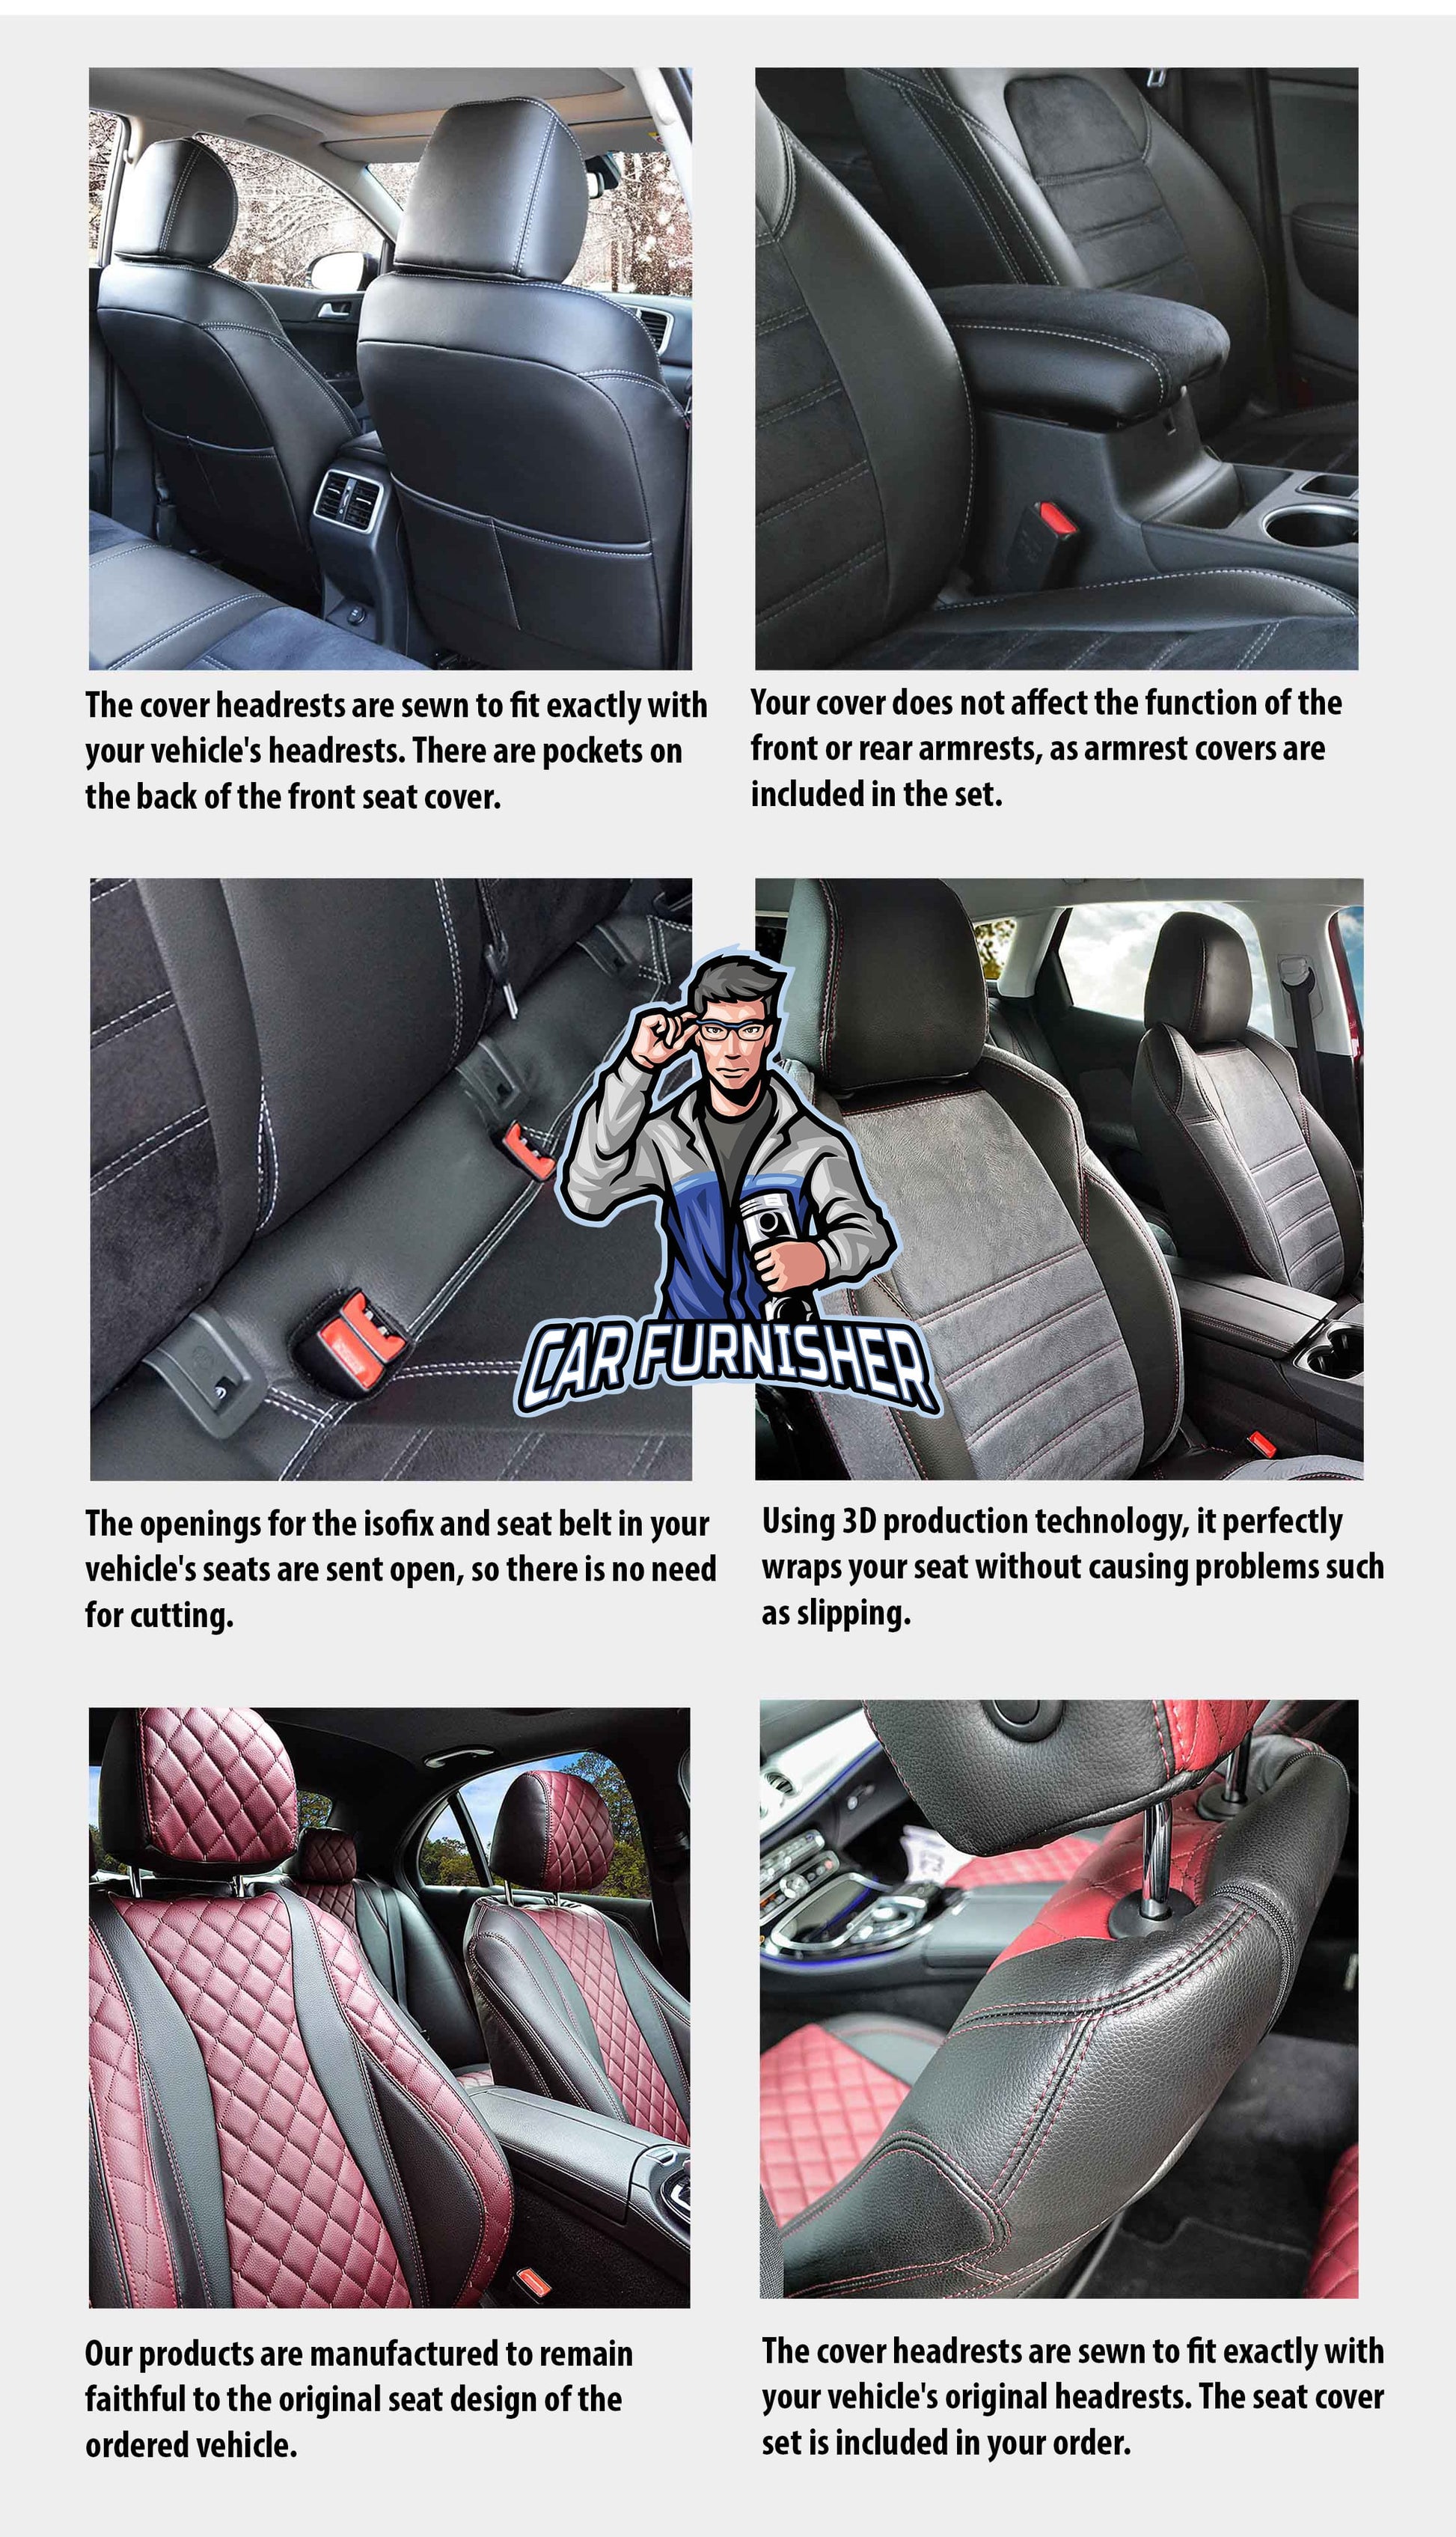 Seat Altea Seat Covers Original Jacquard Design Black Jacquard Fabric